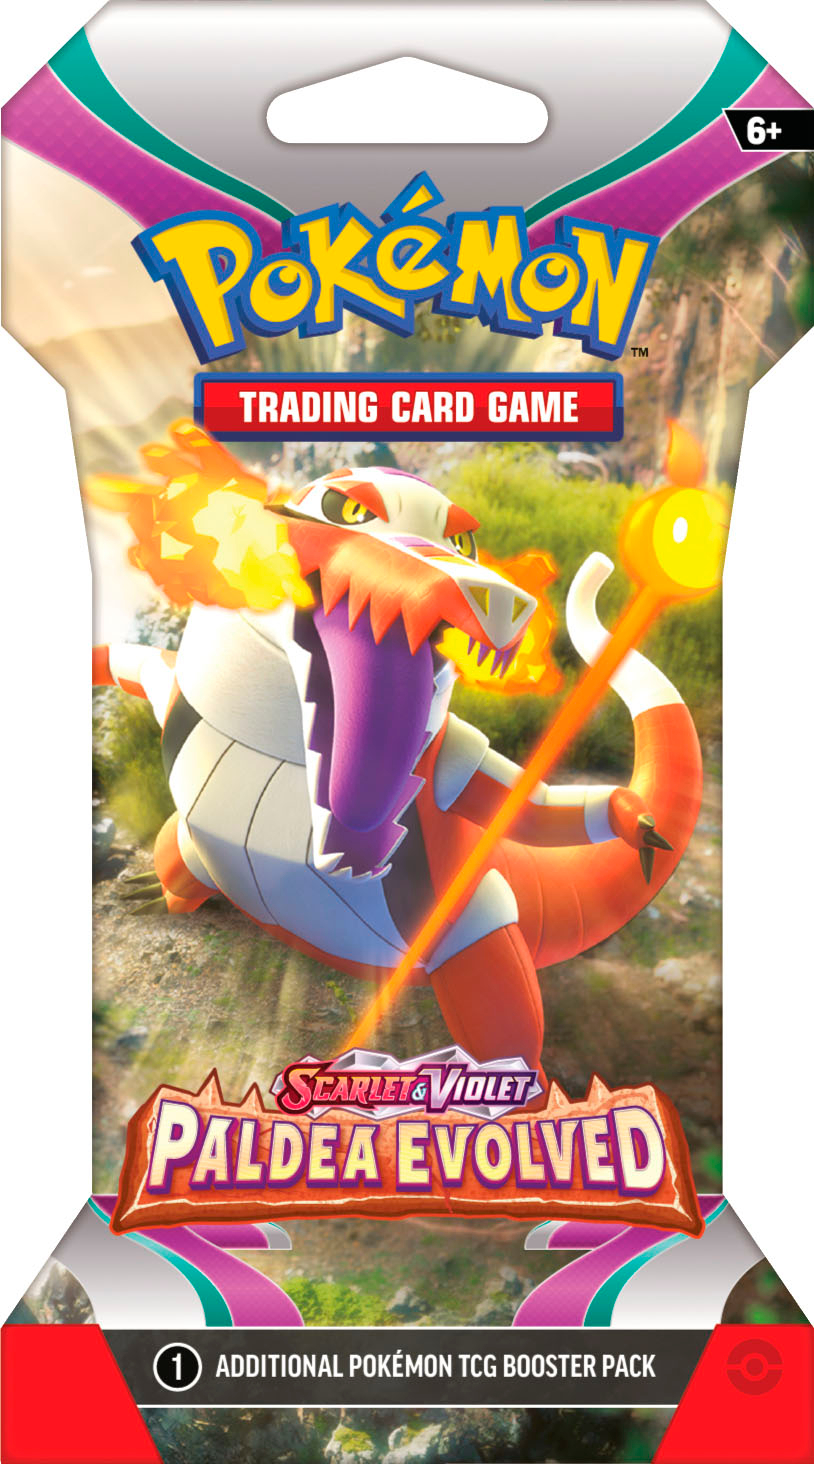 Pokémon Trading Card Game: Paldea Evolved Elite Trainer Box 185